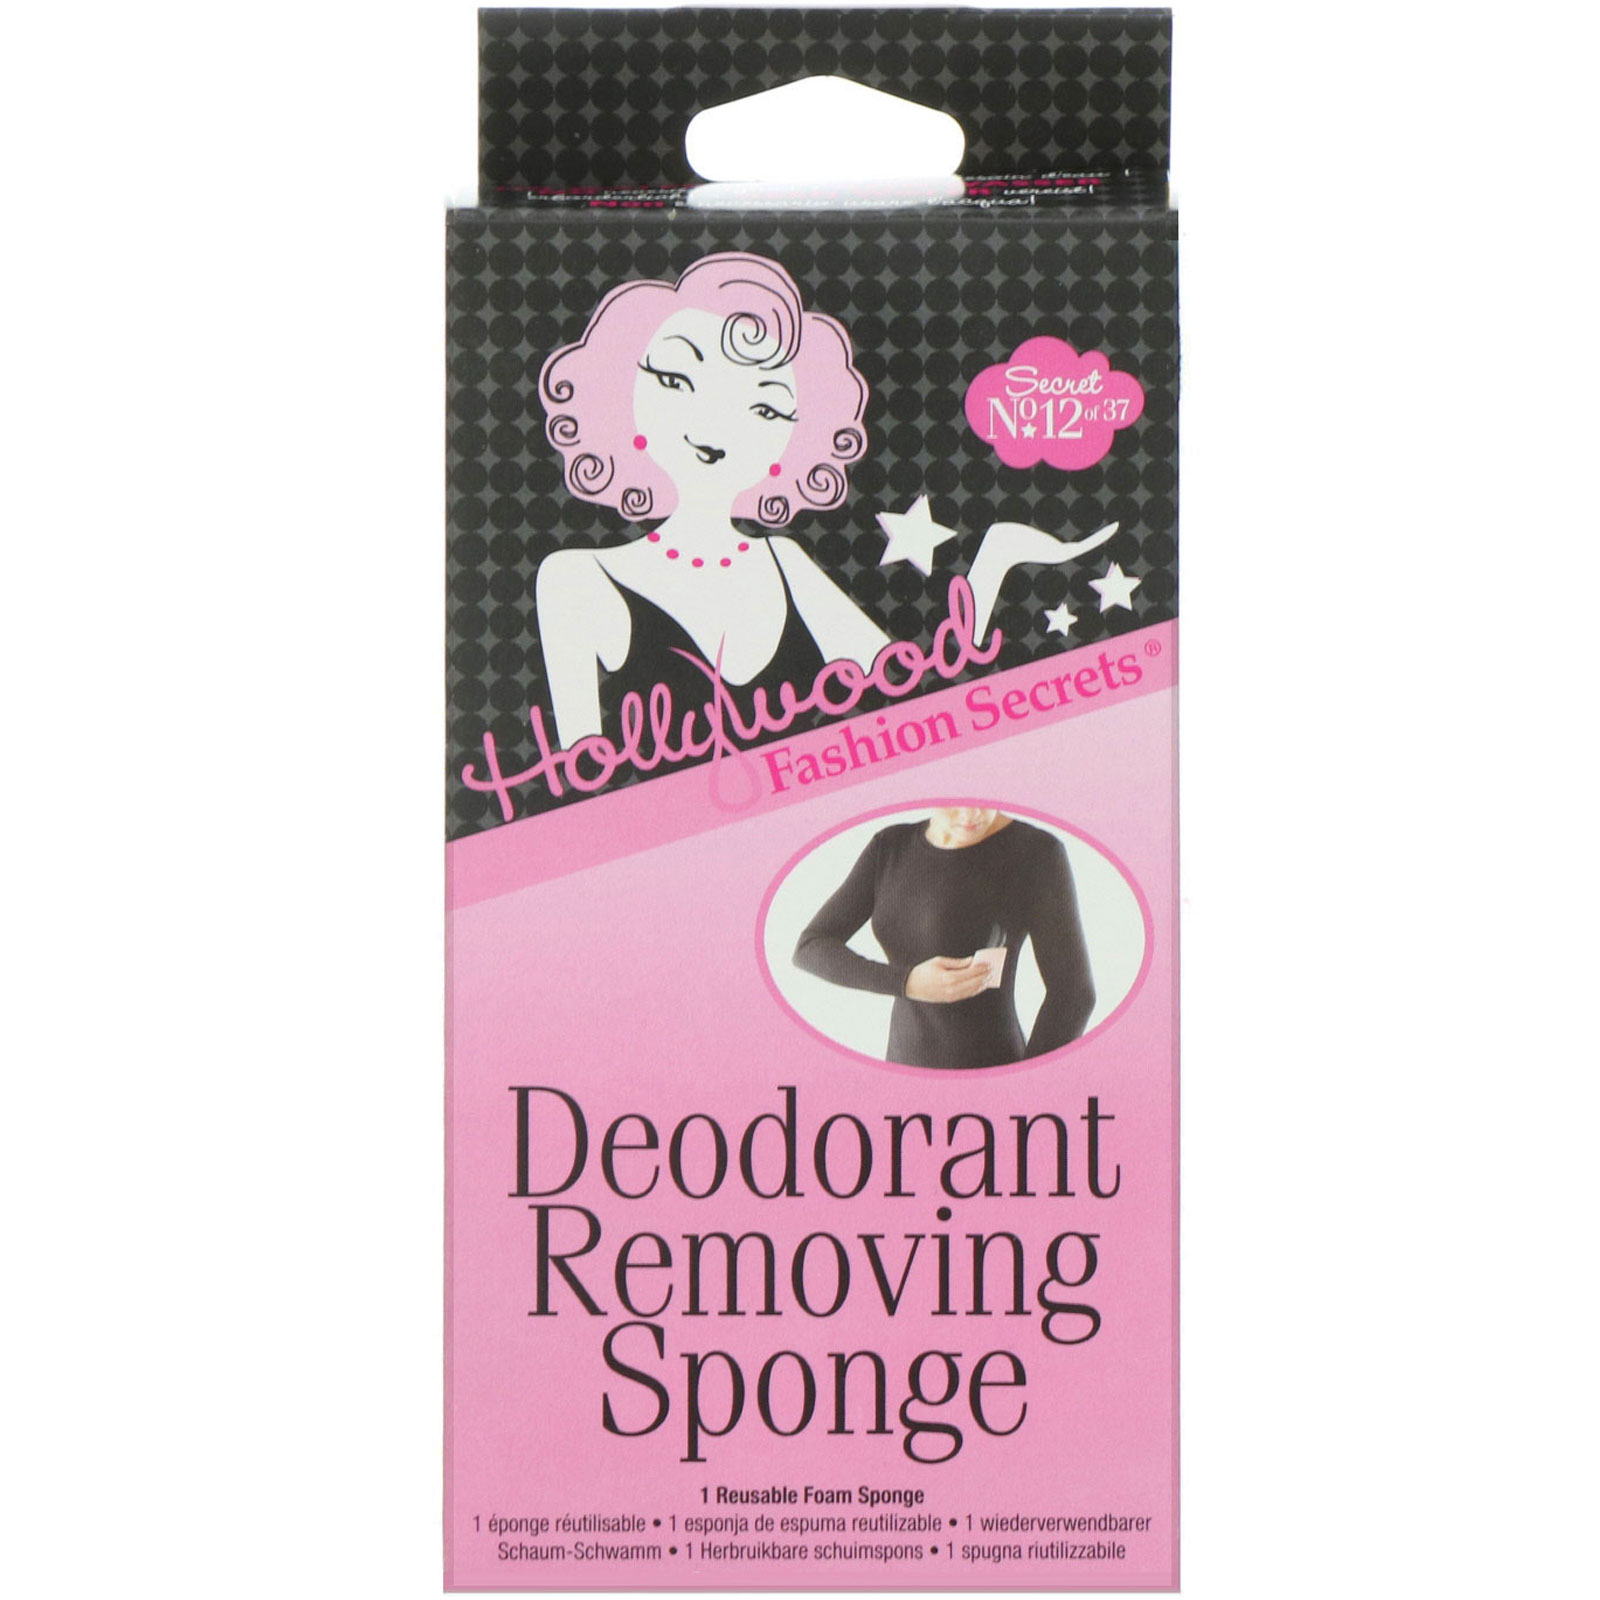 Hollywood Fashion Secrets, Deodorant Removing Sponge, 1 Sponge - iHerb